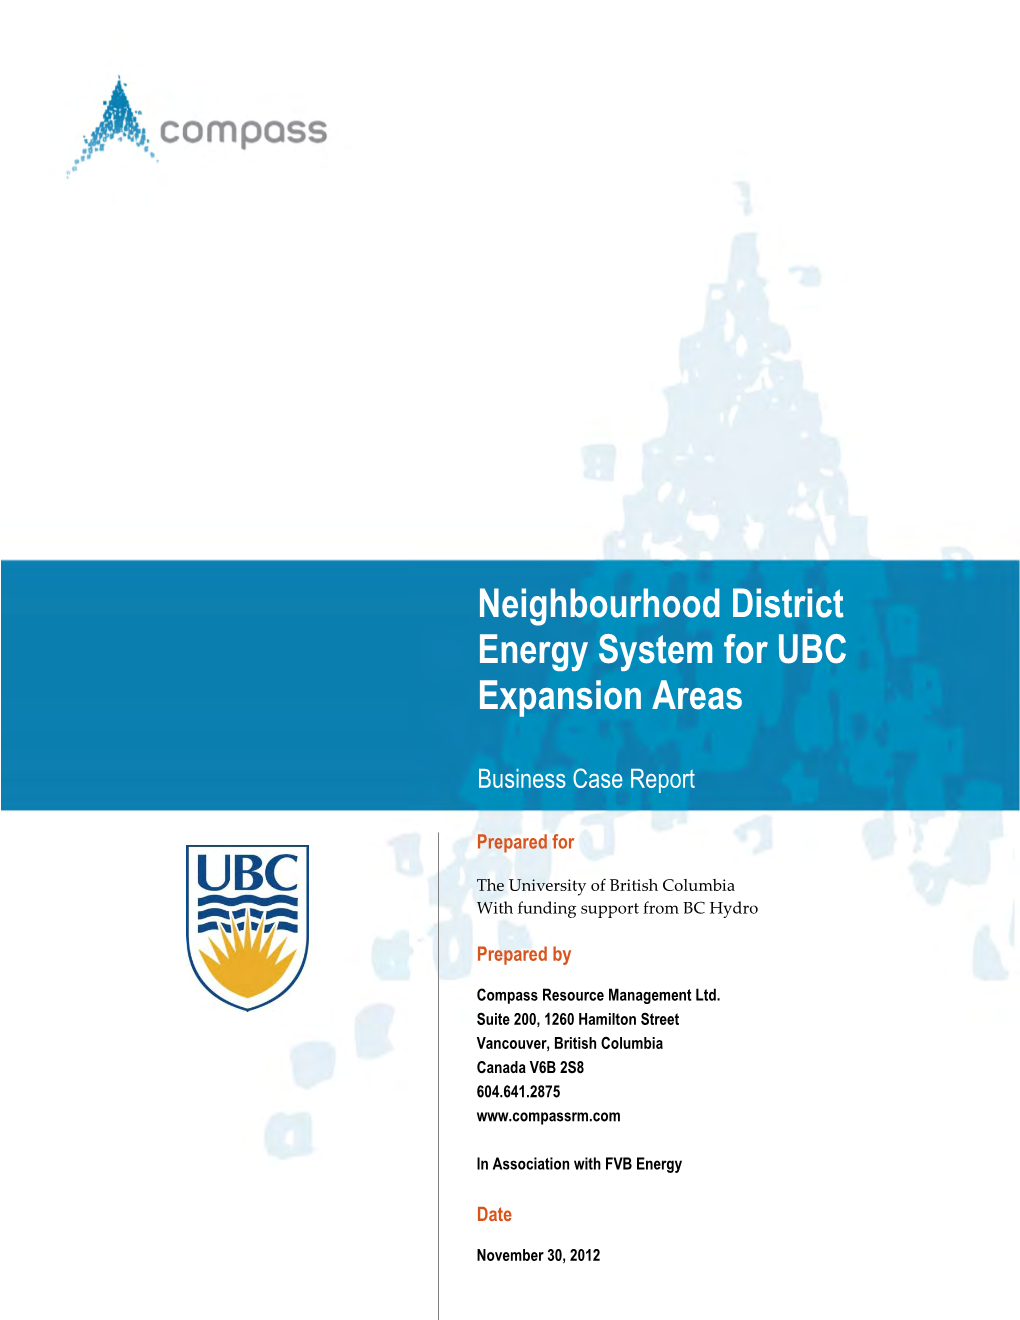 UBC Neighbourhood District Energy System Business Case